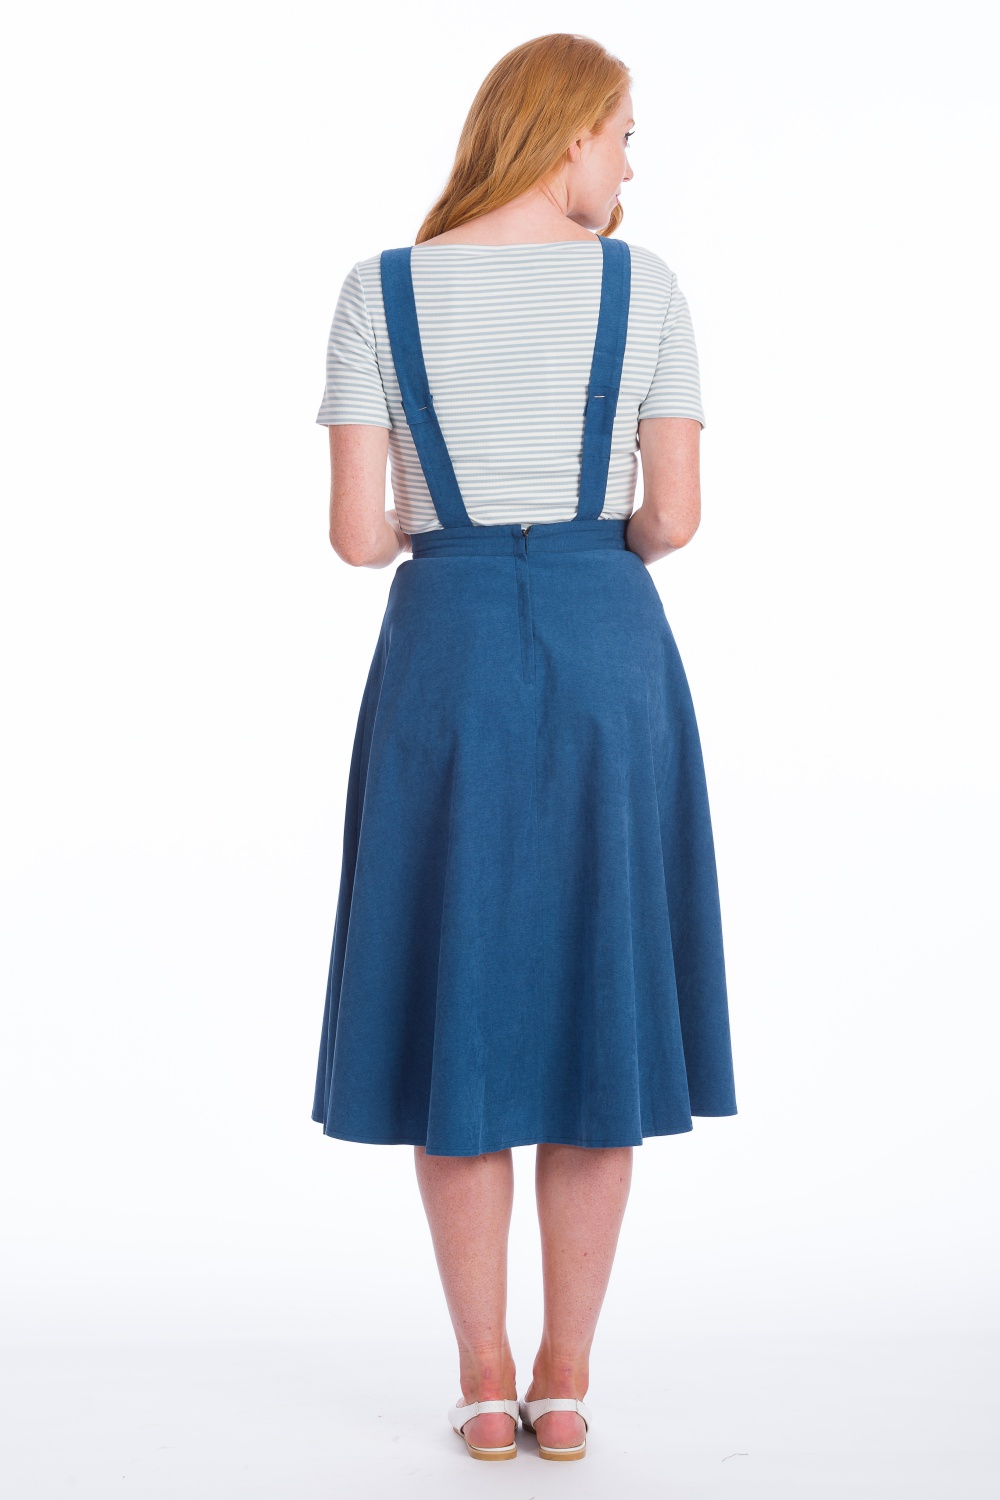 Banned Retro Book Smart Blue Pinafore 50s Dress Skirt